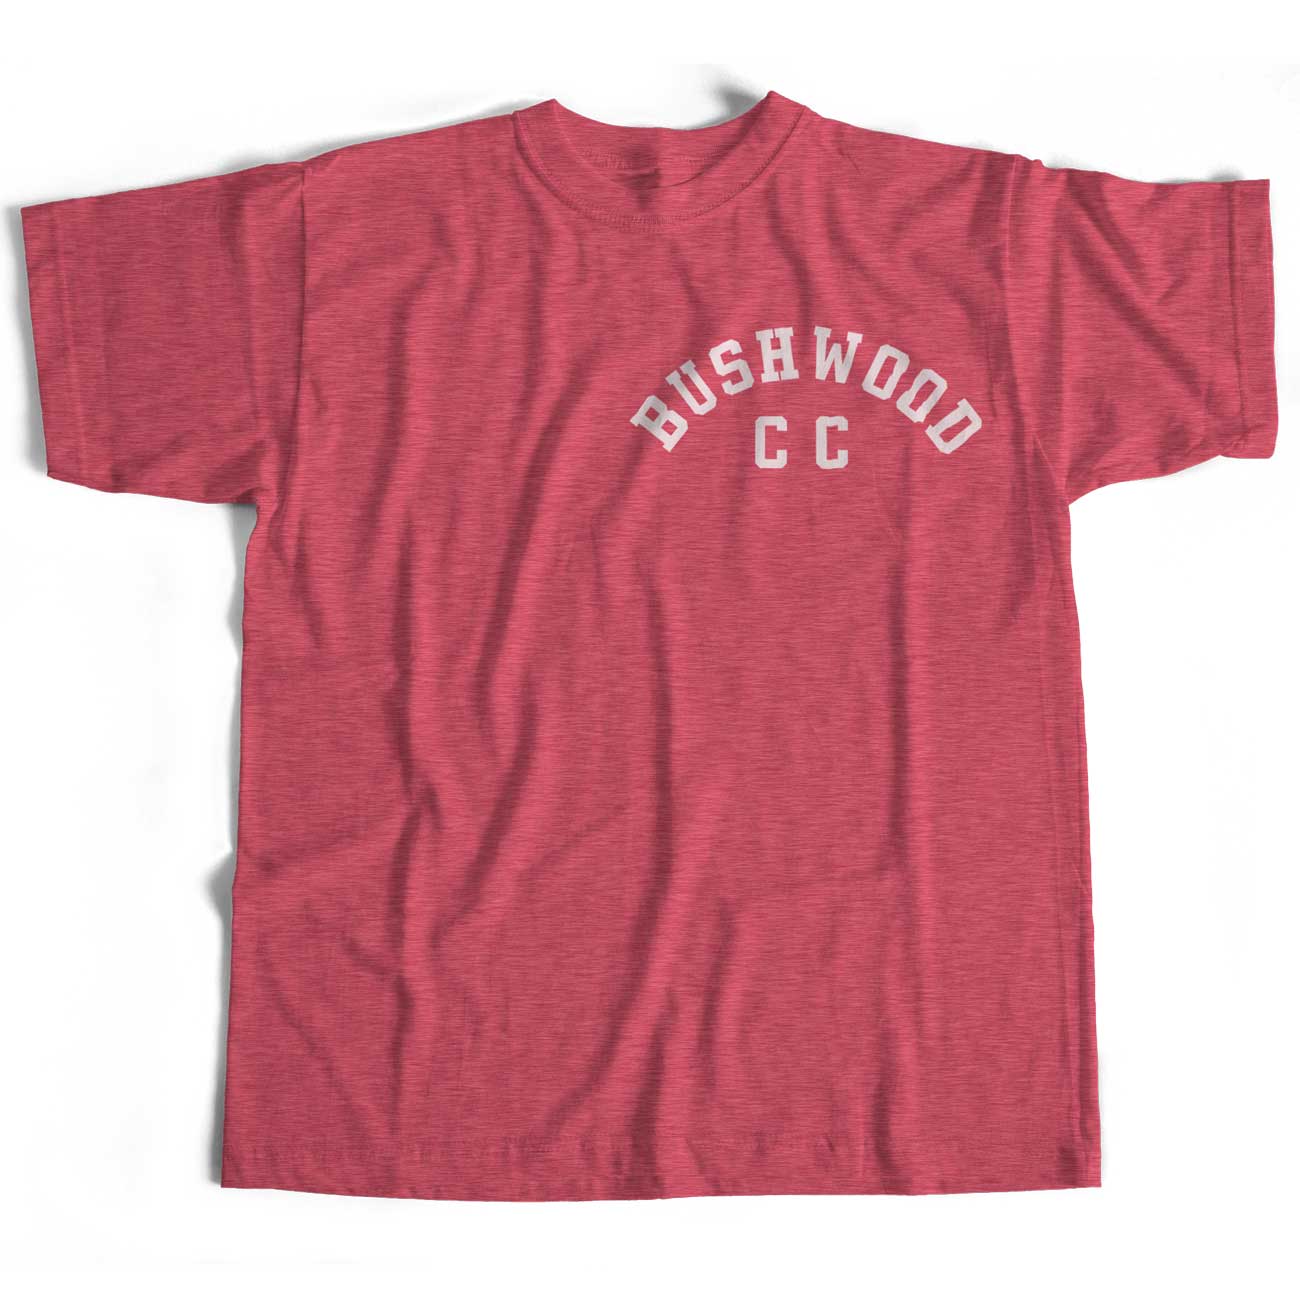 Inspired by Caddyshack T Shirt - Bushwood CC logo Red